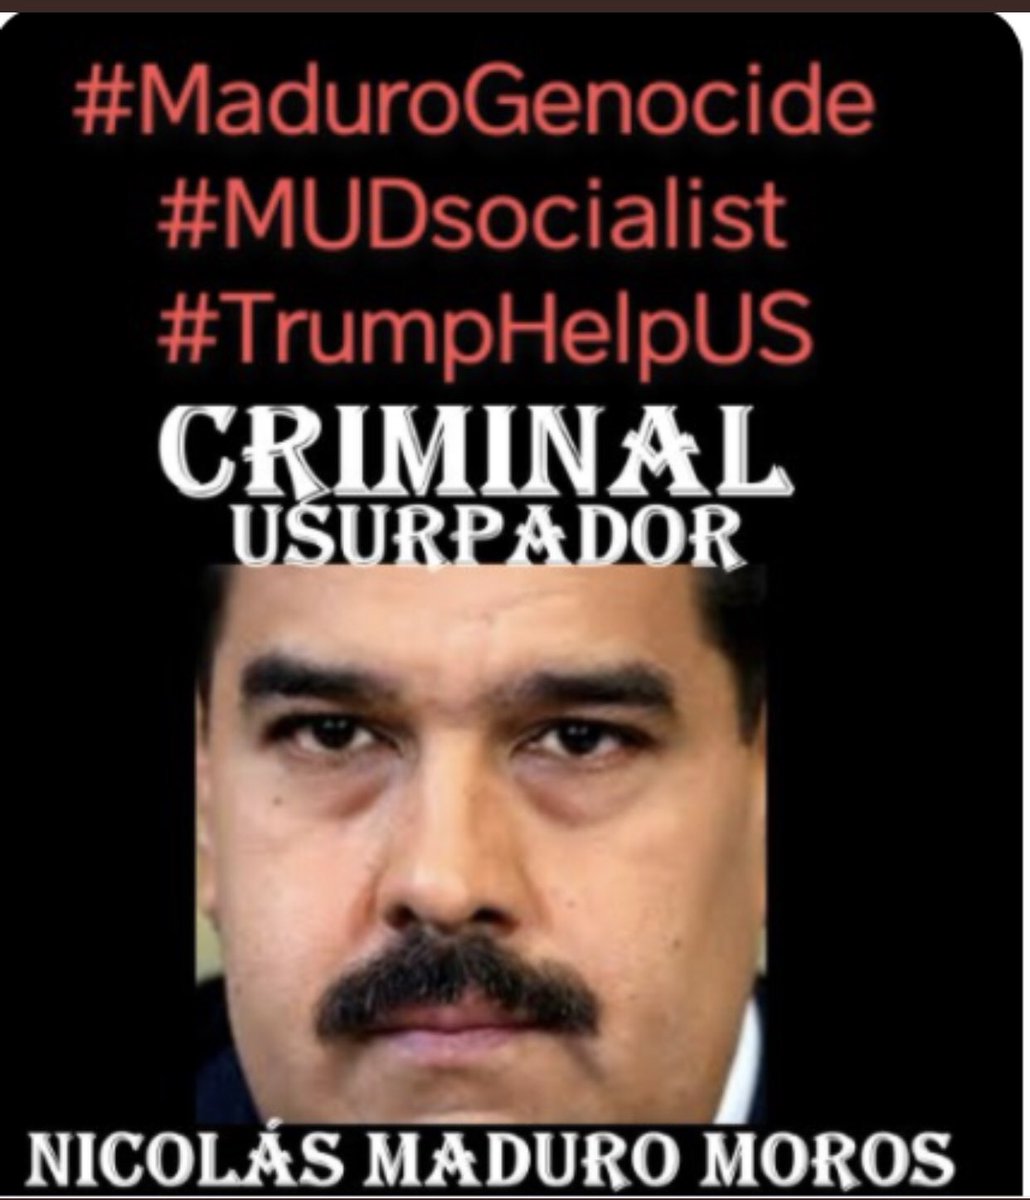 #MaduroGenocide #MUDsocialist #TrumpHelpUS